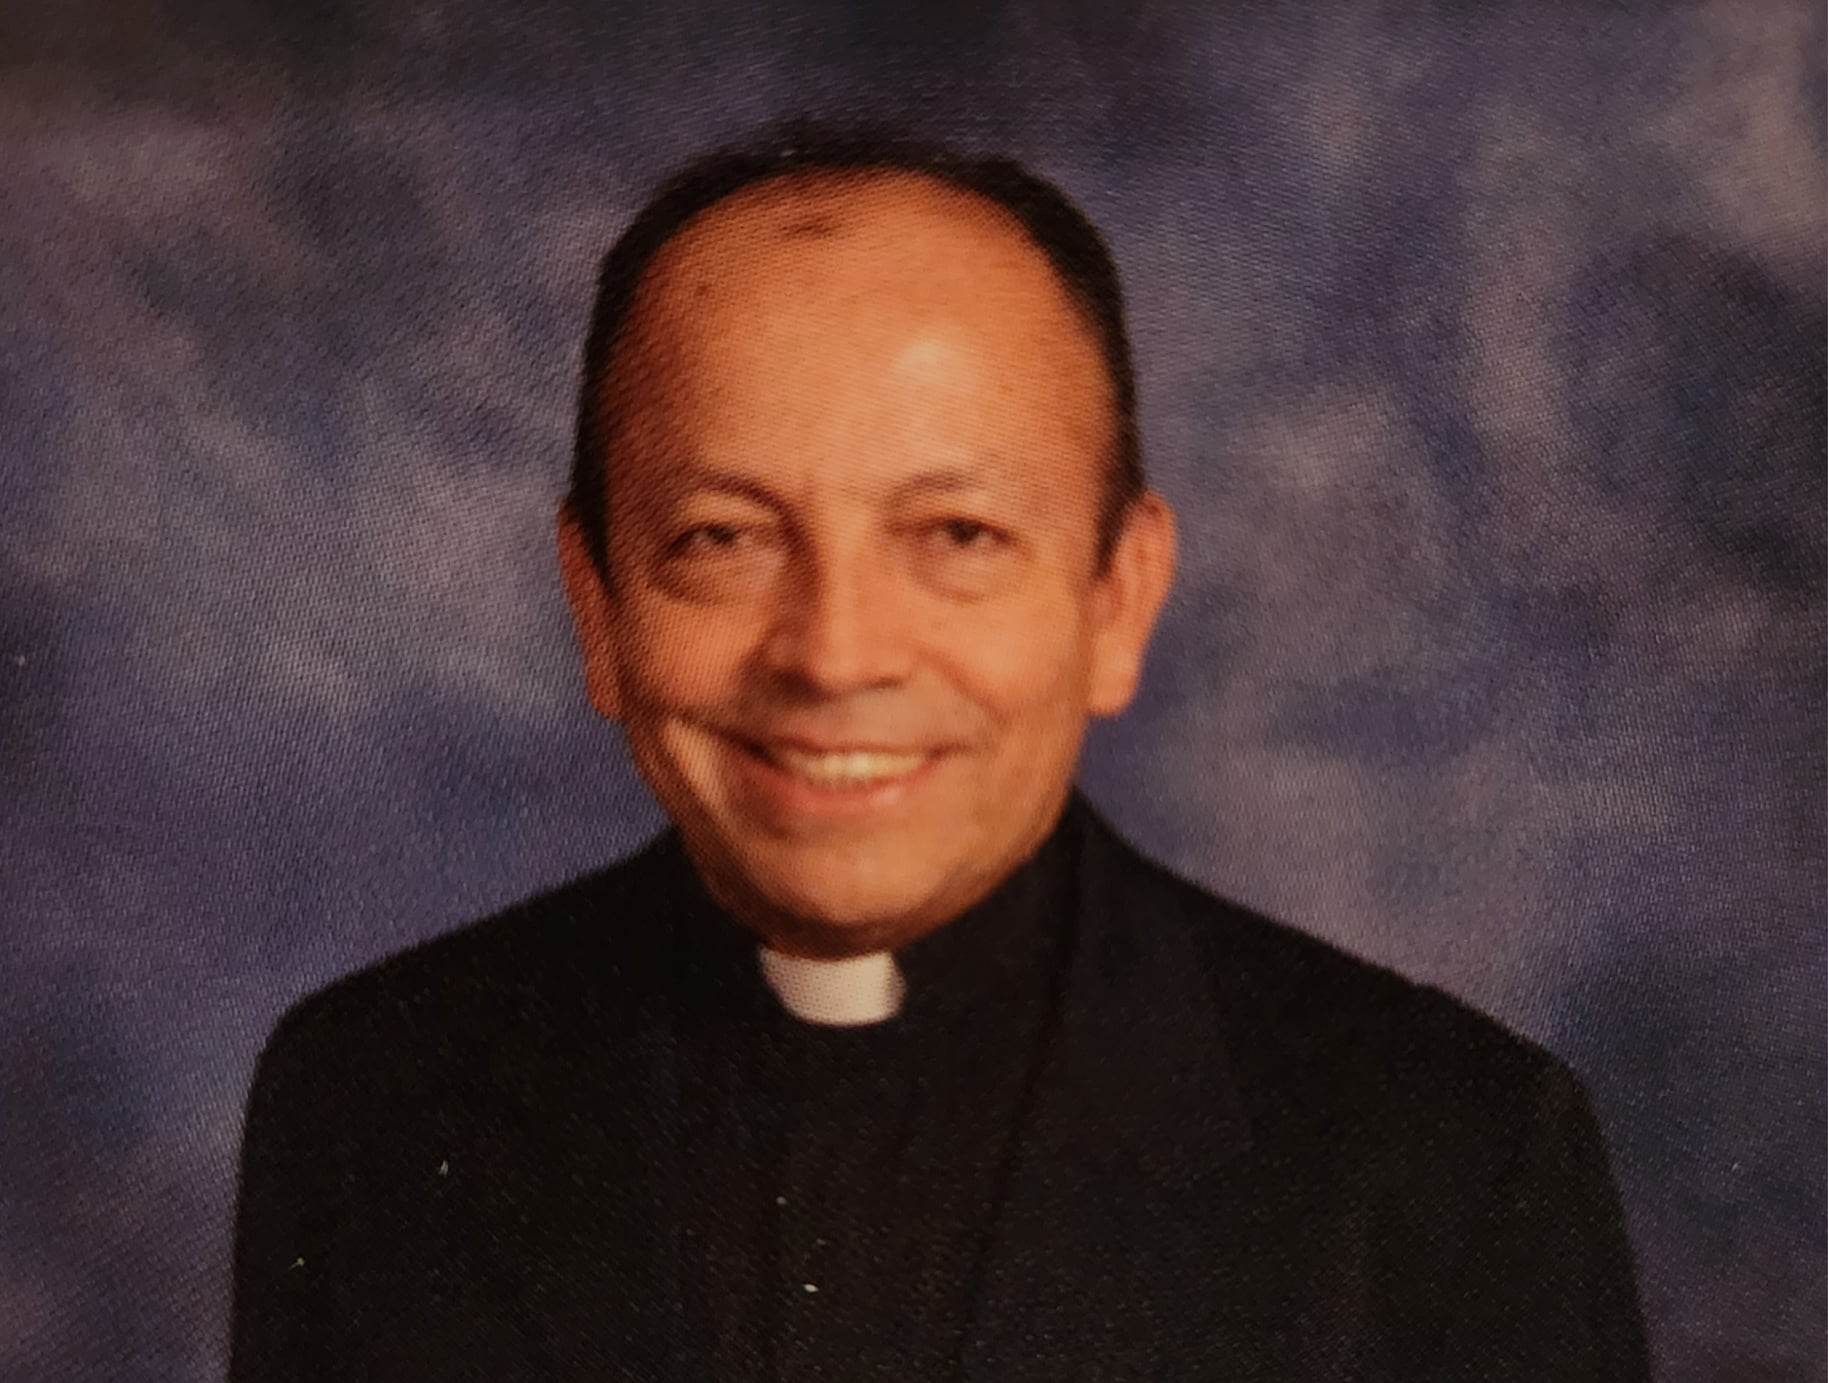 Rev. Orozco